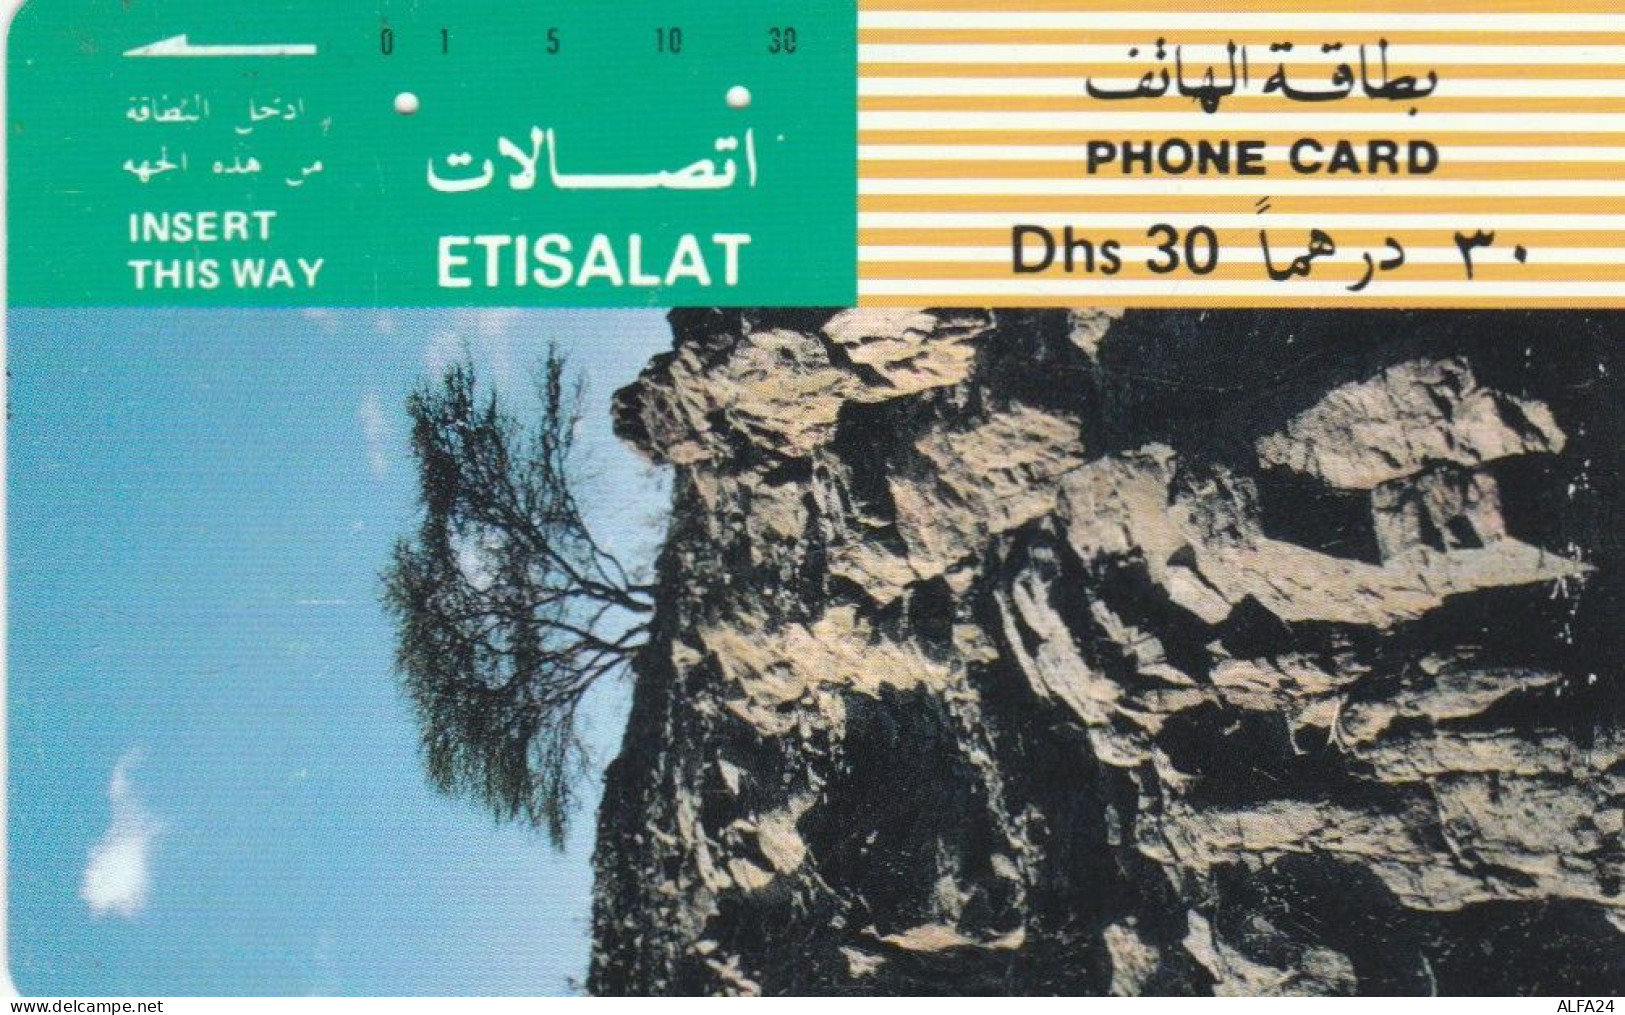 PHONE CARD EMIRATI ARABI (CK1426 - Emirats Arabes Unis